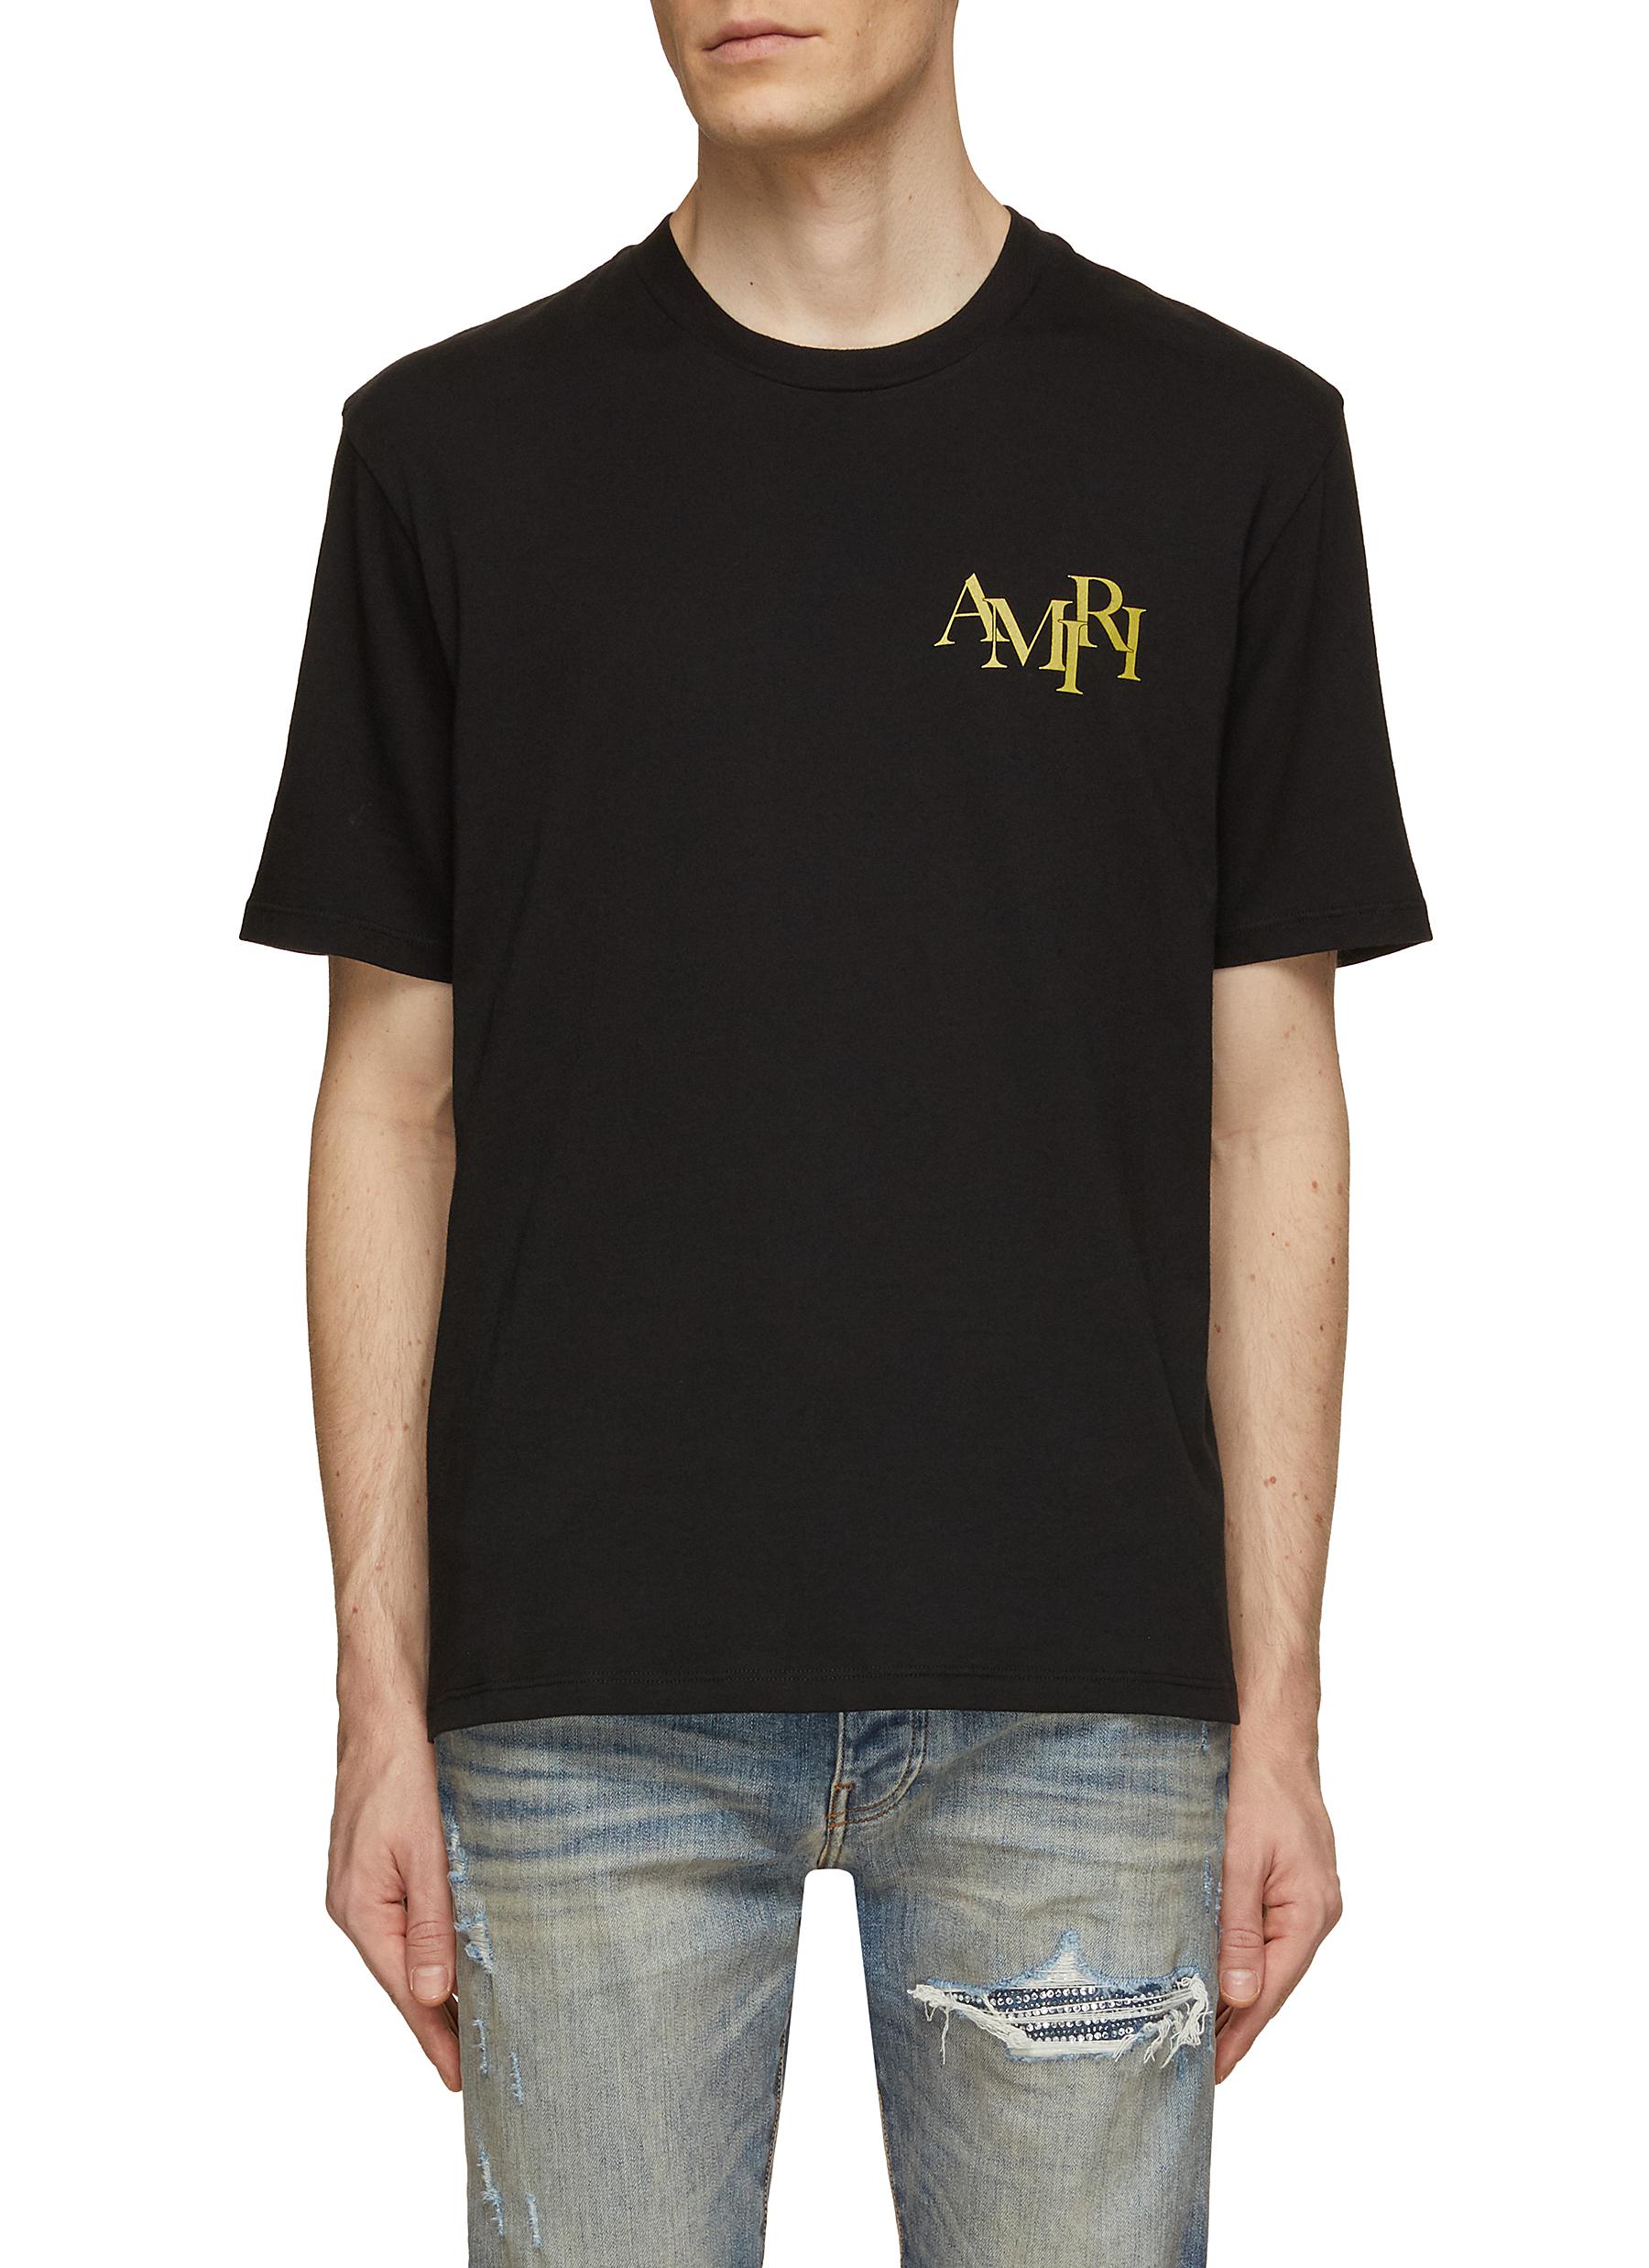 AMIRI, Crystal Embellished Champagne Logo T-Shirt, Men